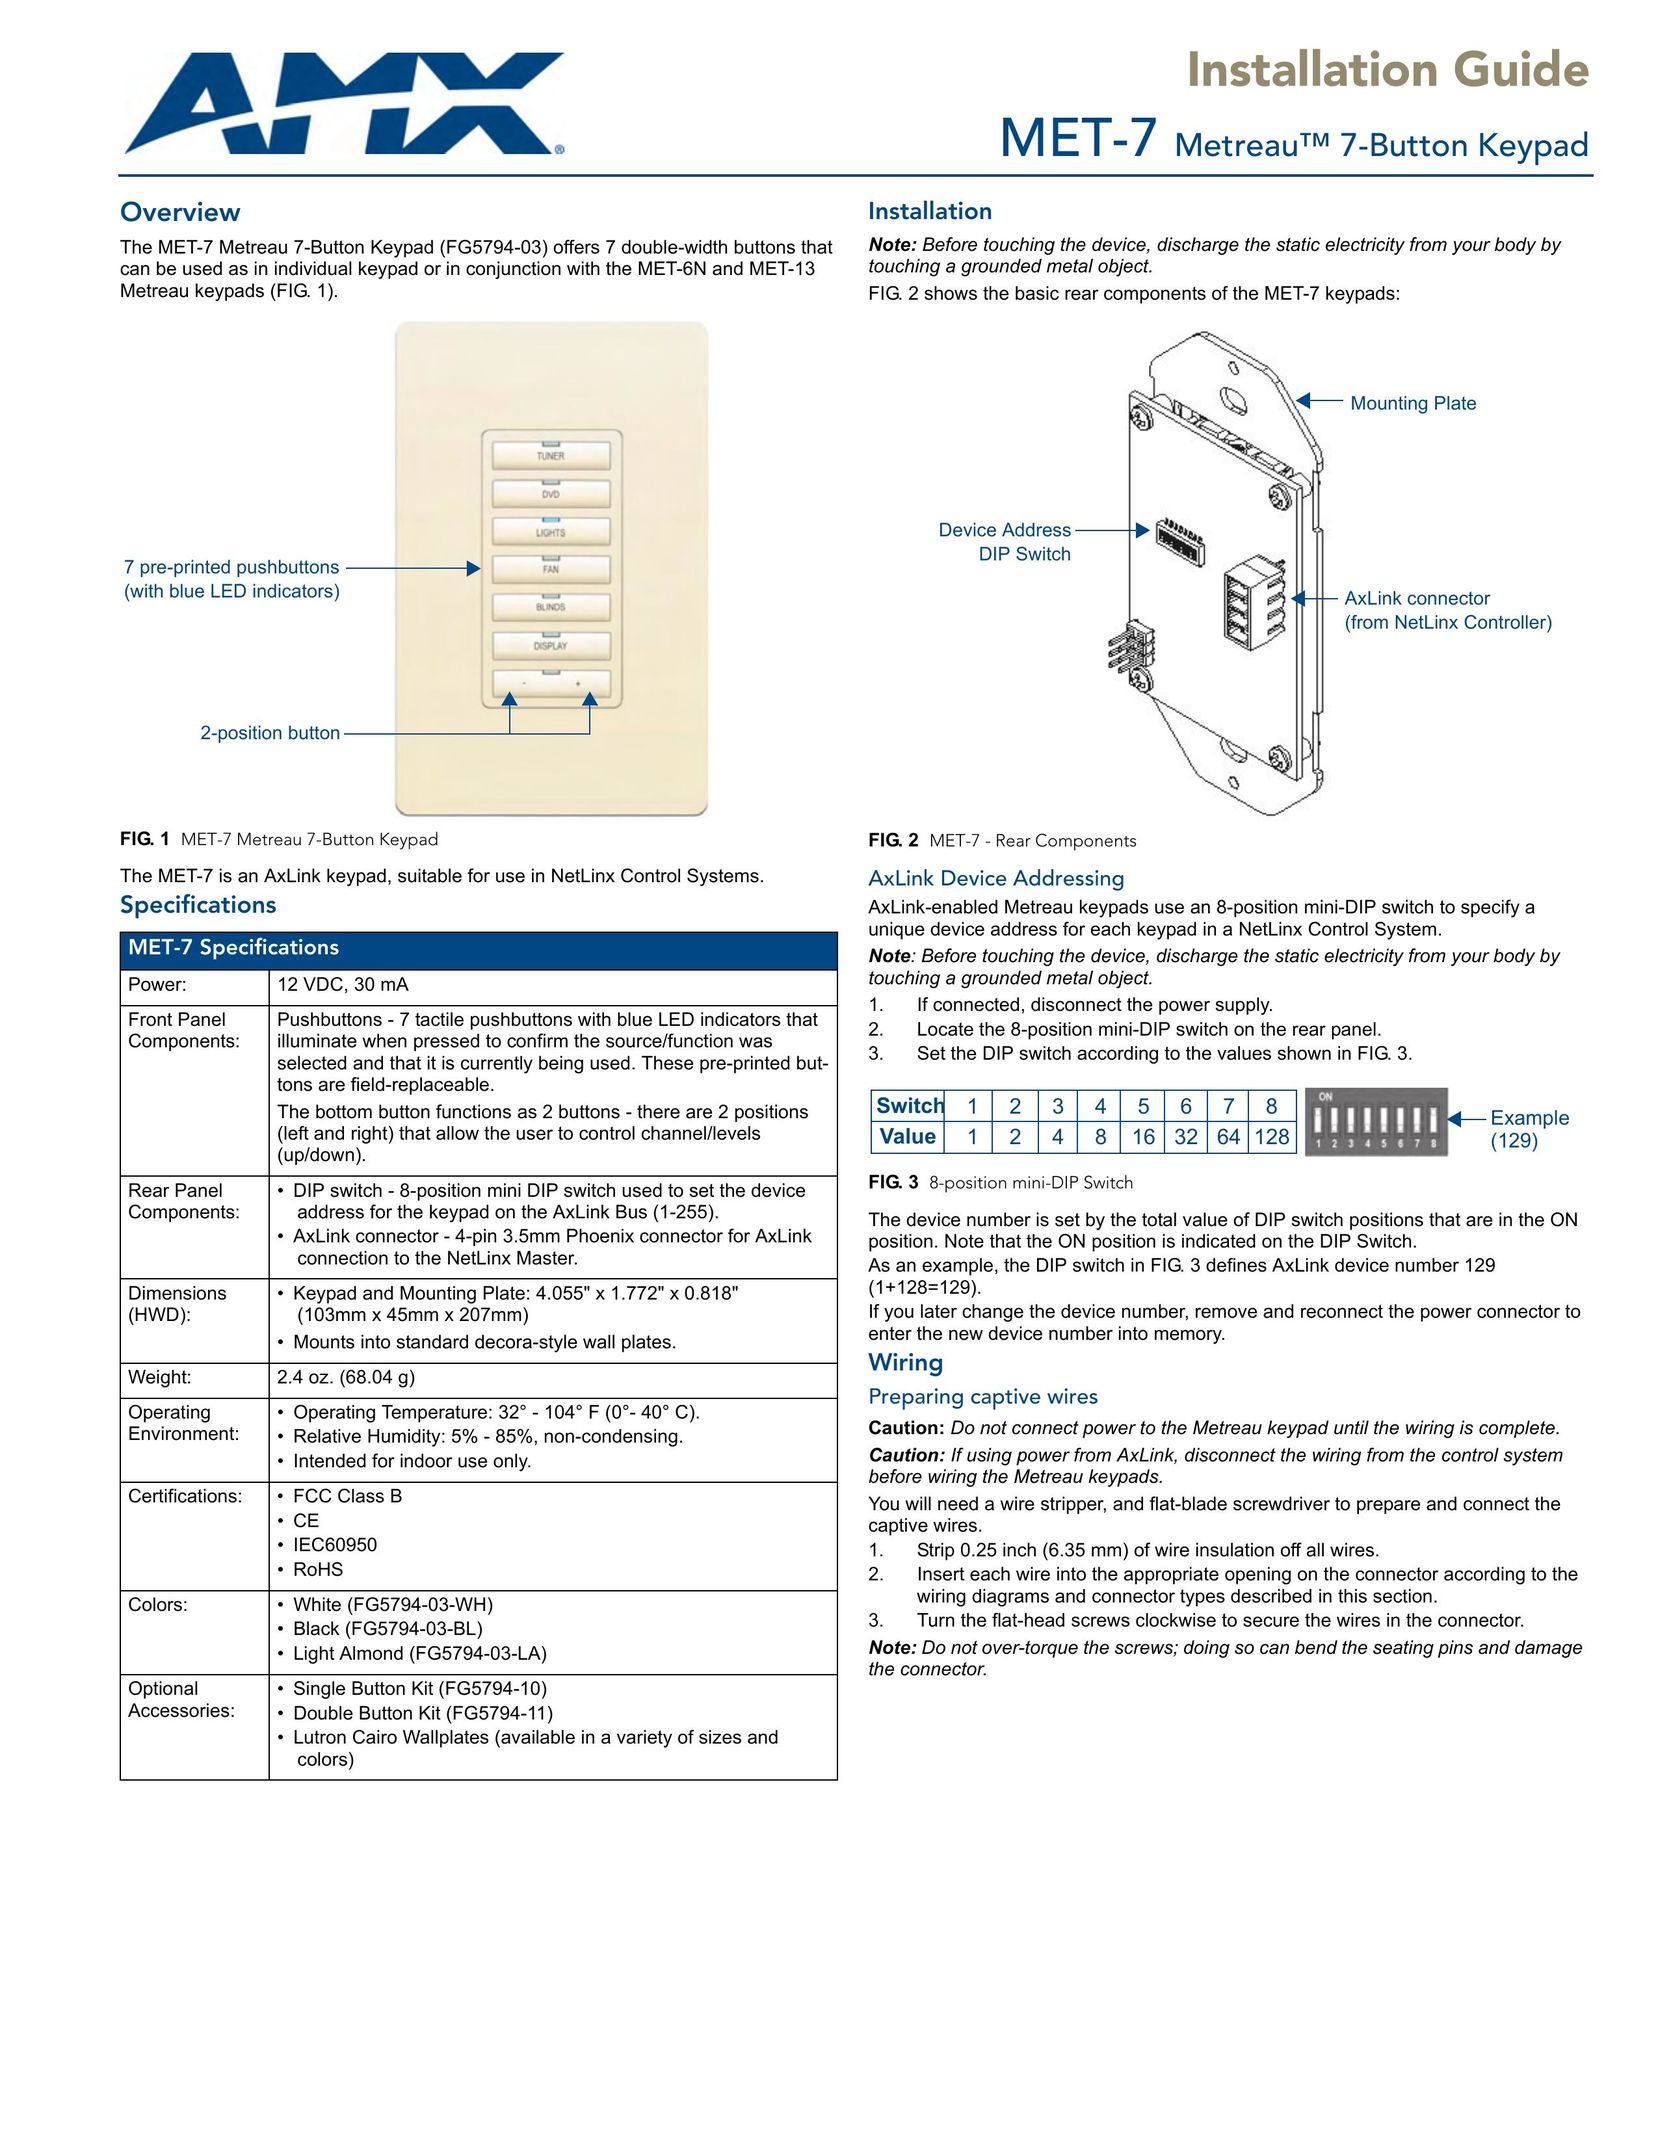 AMX MET-7 Network Card User Manual